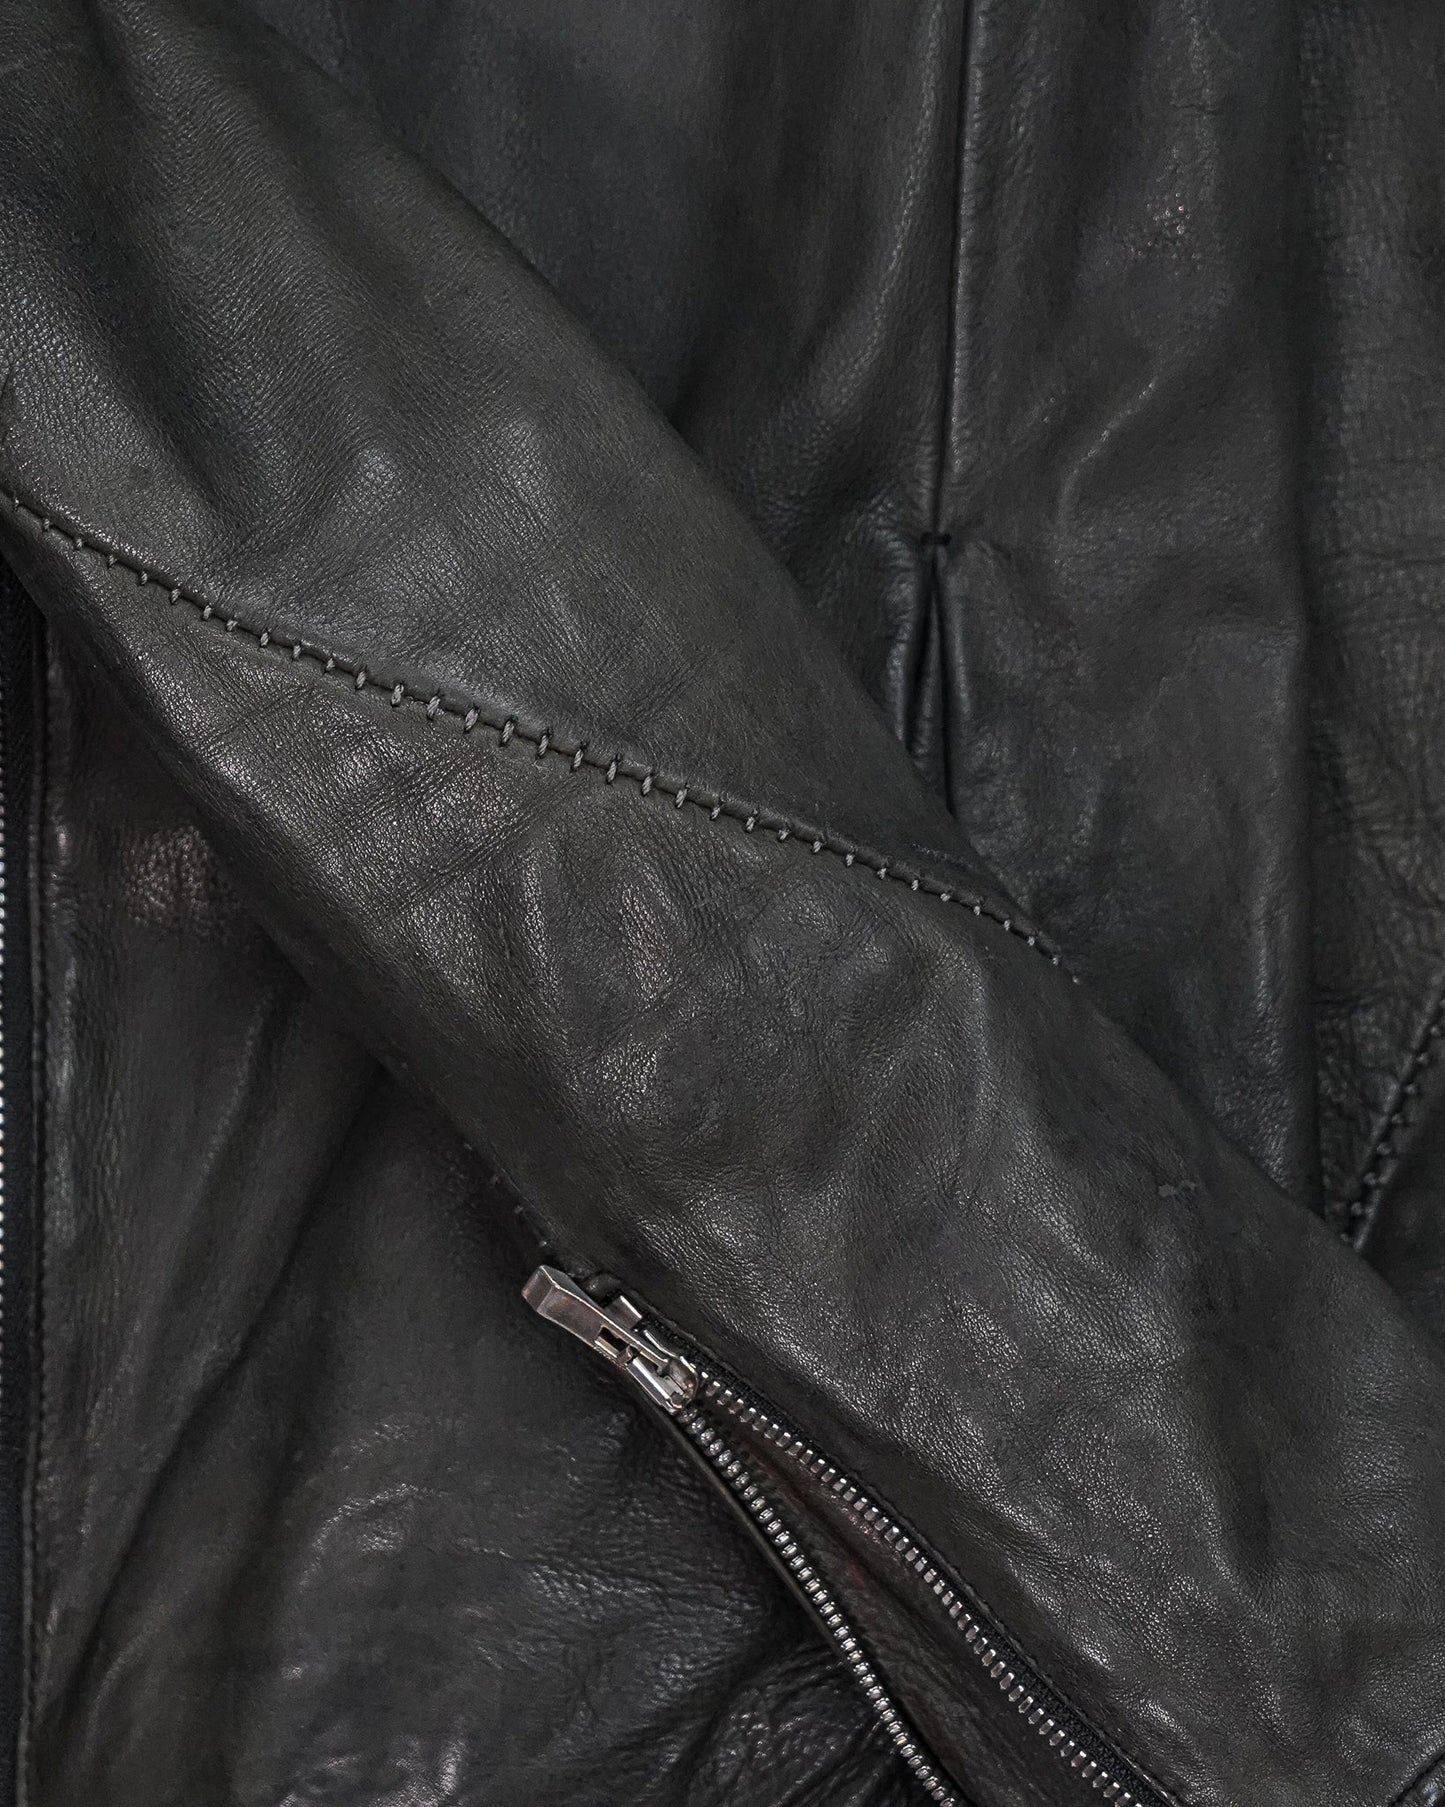 Incarnation Scarstitch Spiral Sleeve Leather Jacket